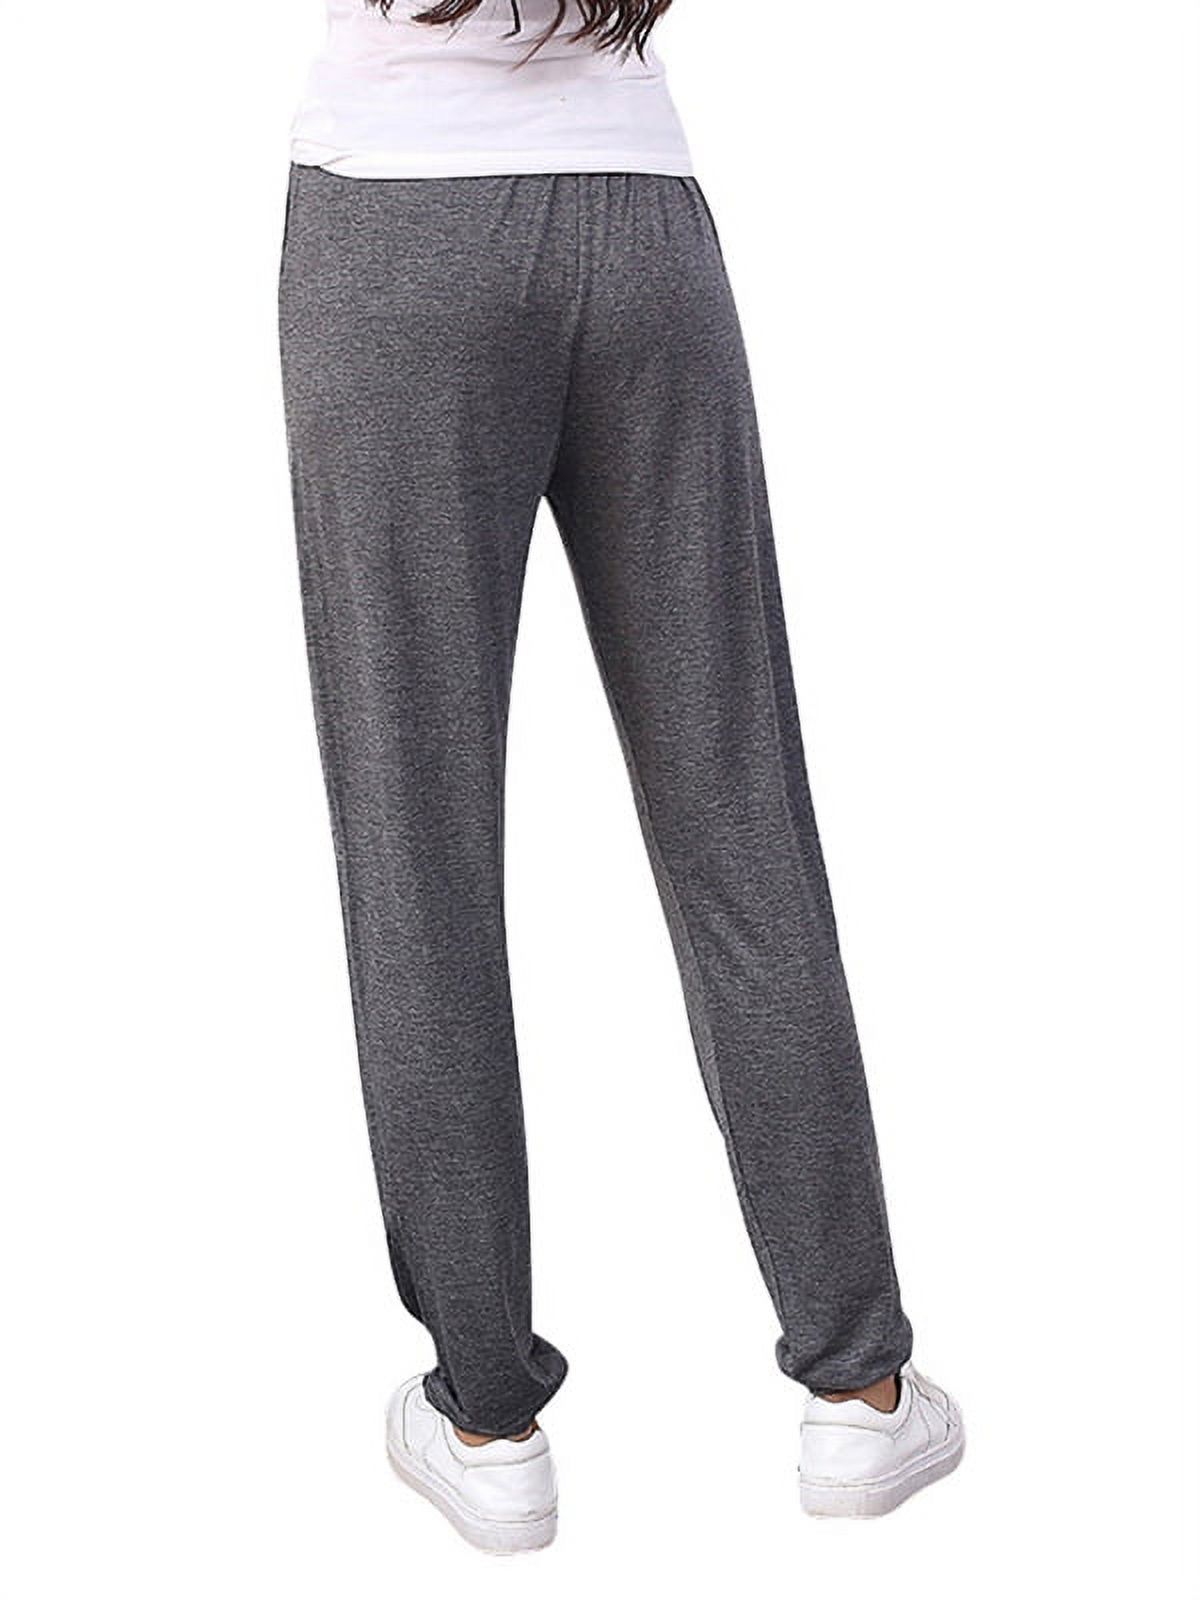 Women Sports Jogging Gym Yoga Sweatpants Casual Fit Harem Pants Trousers - image 2 of 3